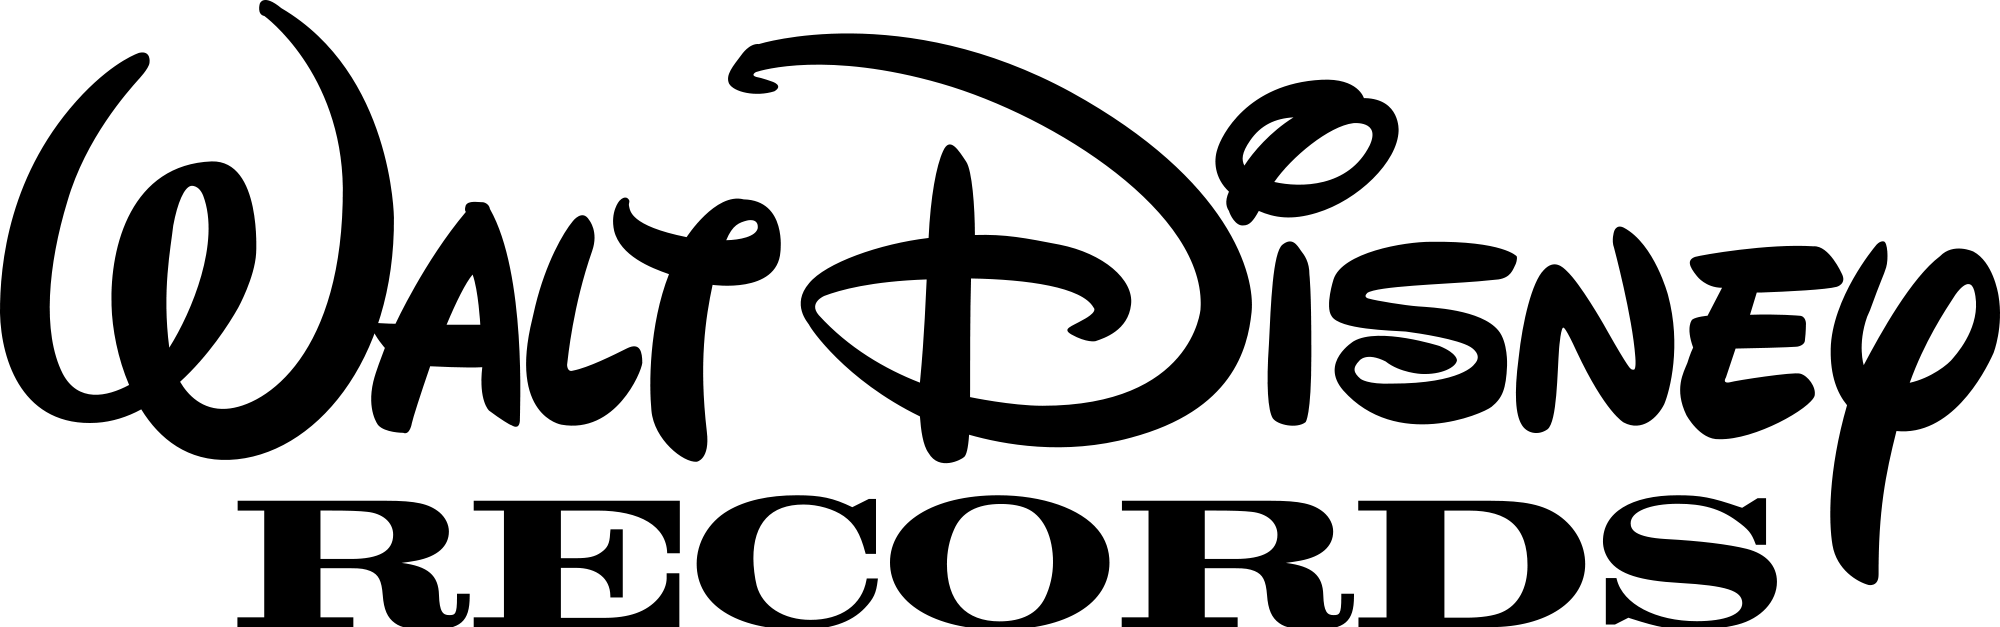 Walt Disney Records Logo - Walt Disney Records logo.svg